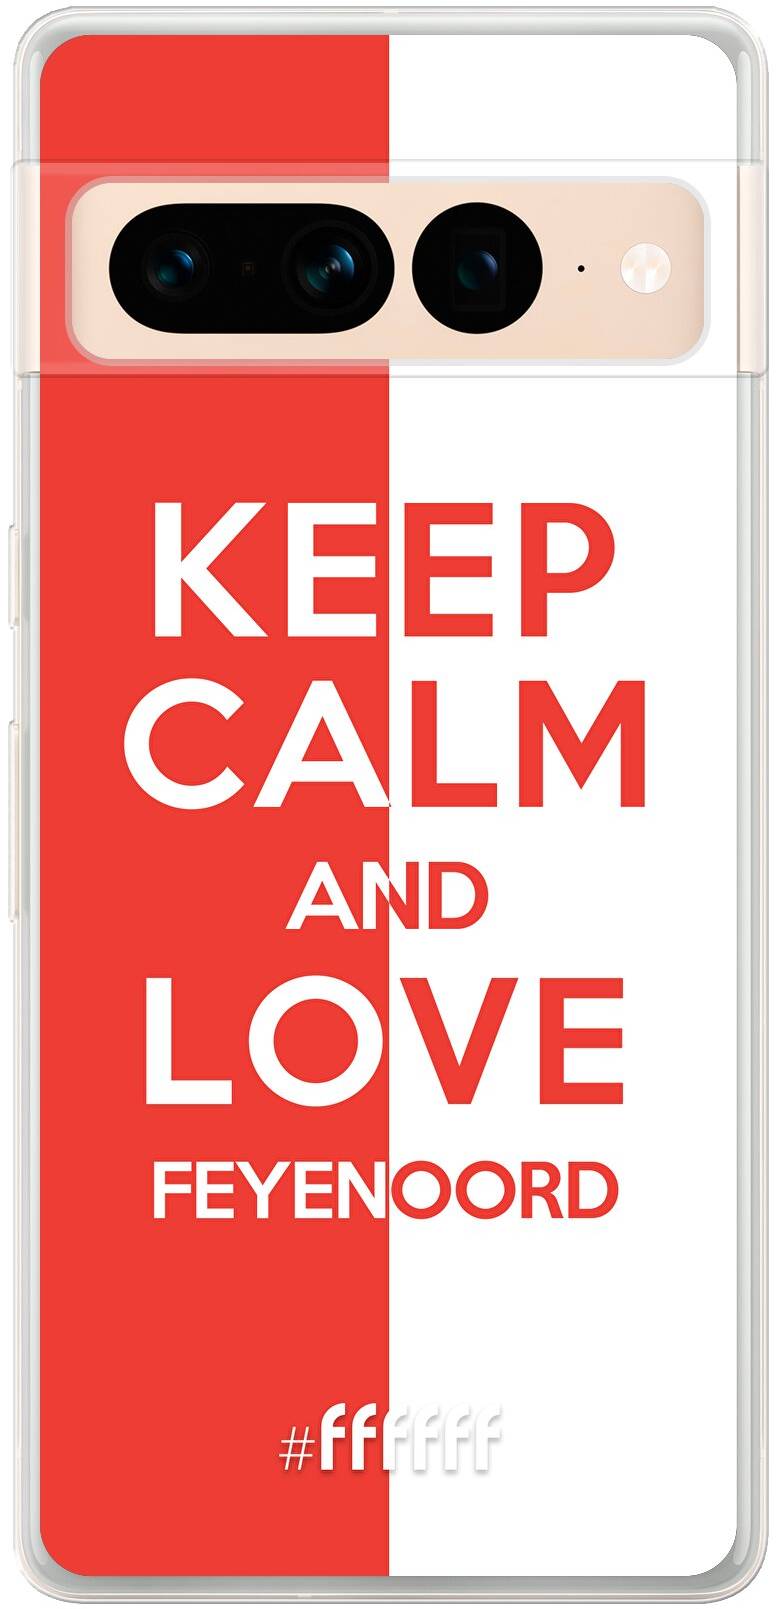 Feyenoord - Keep calm Pixel 7 Pro